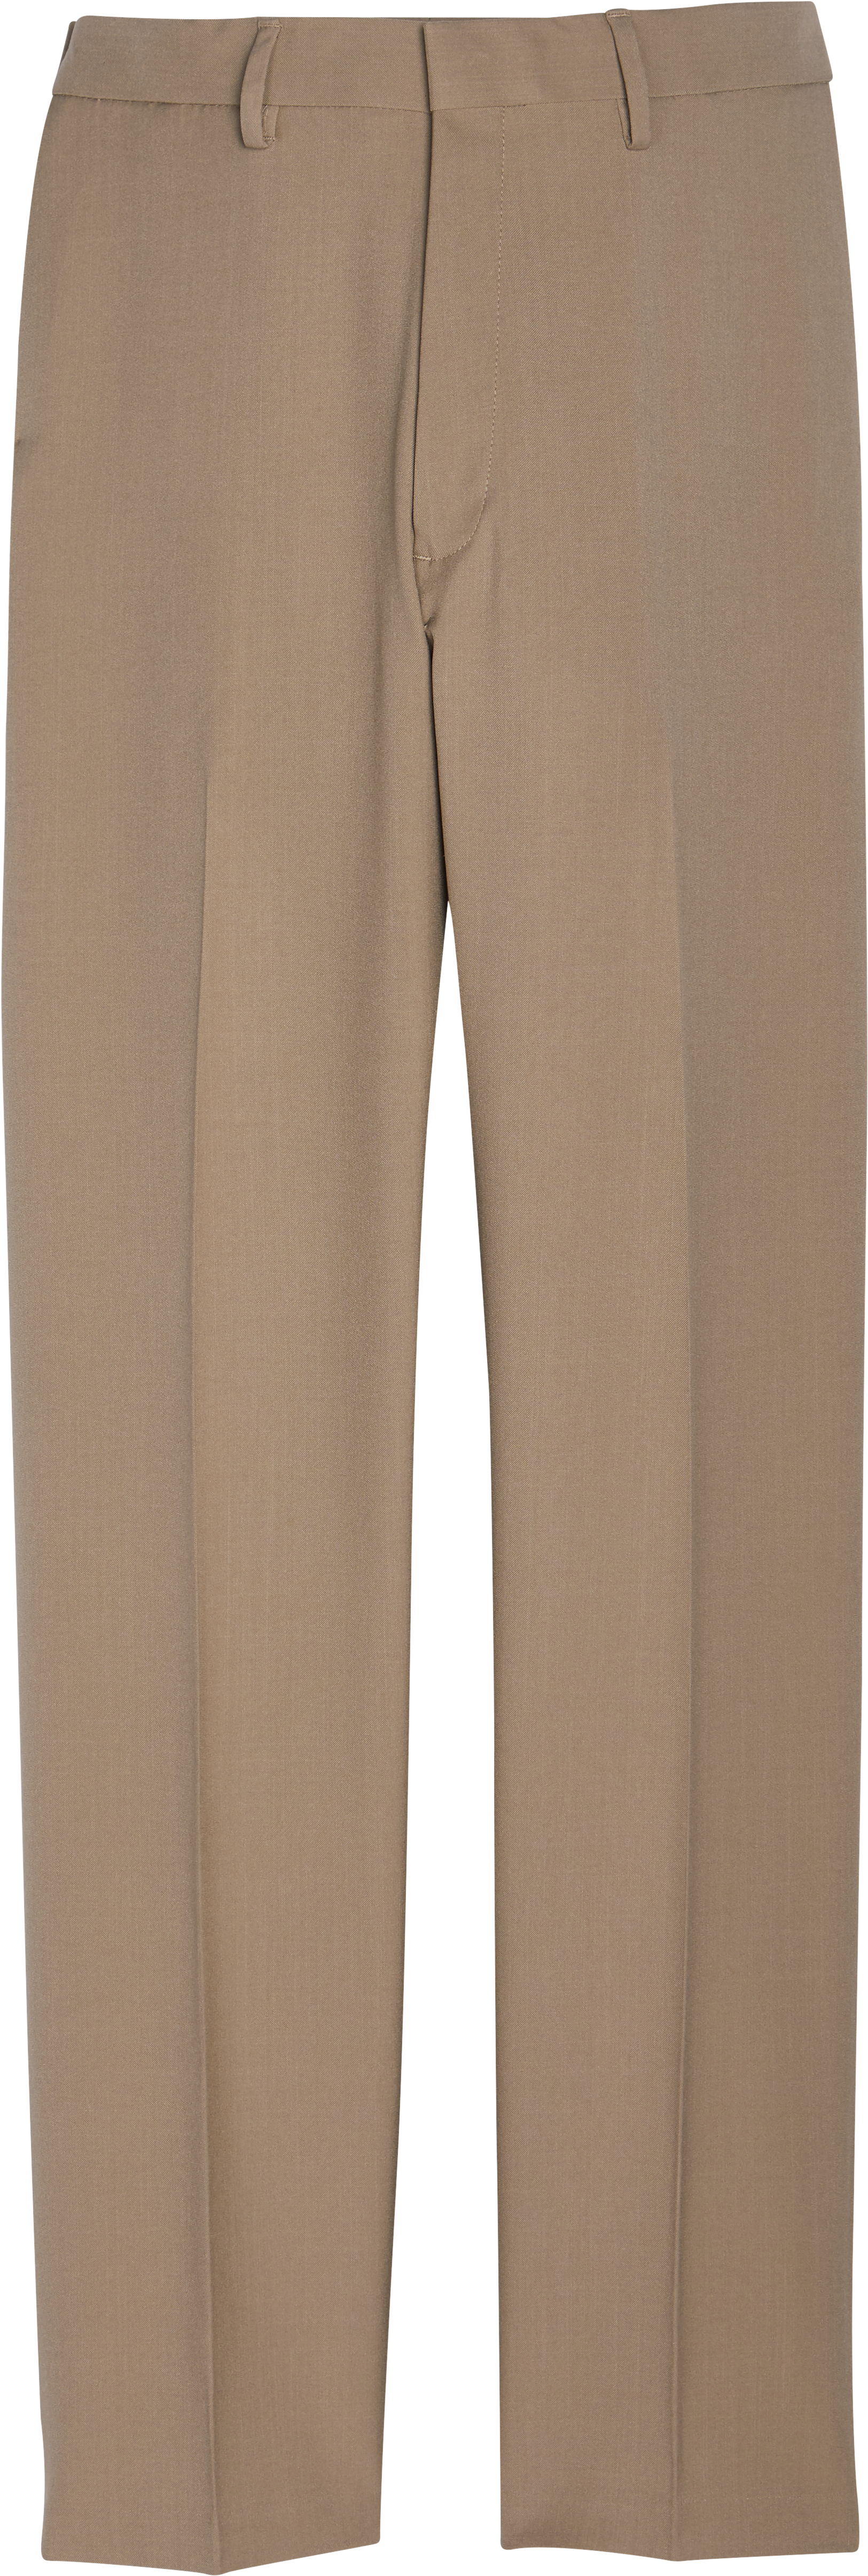 Haggar Premium Comfort Khaki Classic Fit Dress Pants - Men's Pants ...